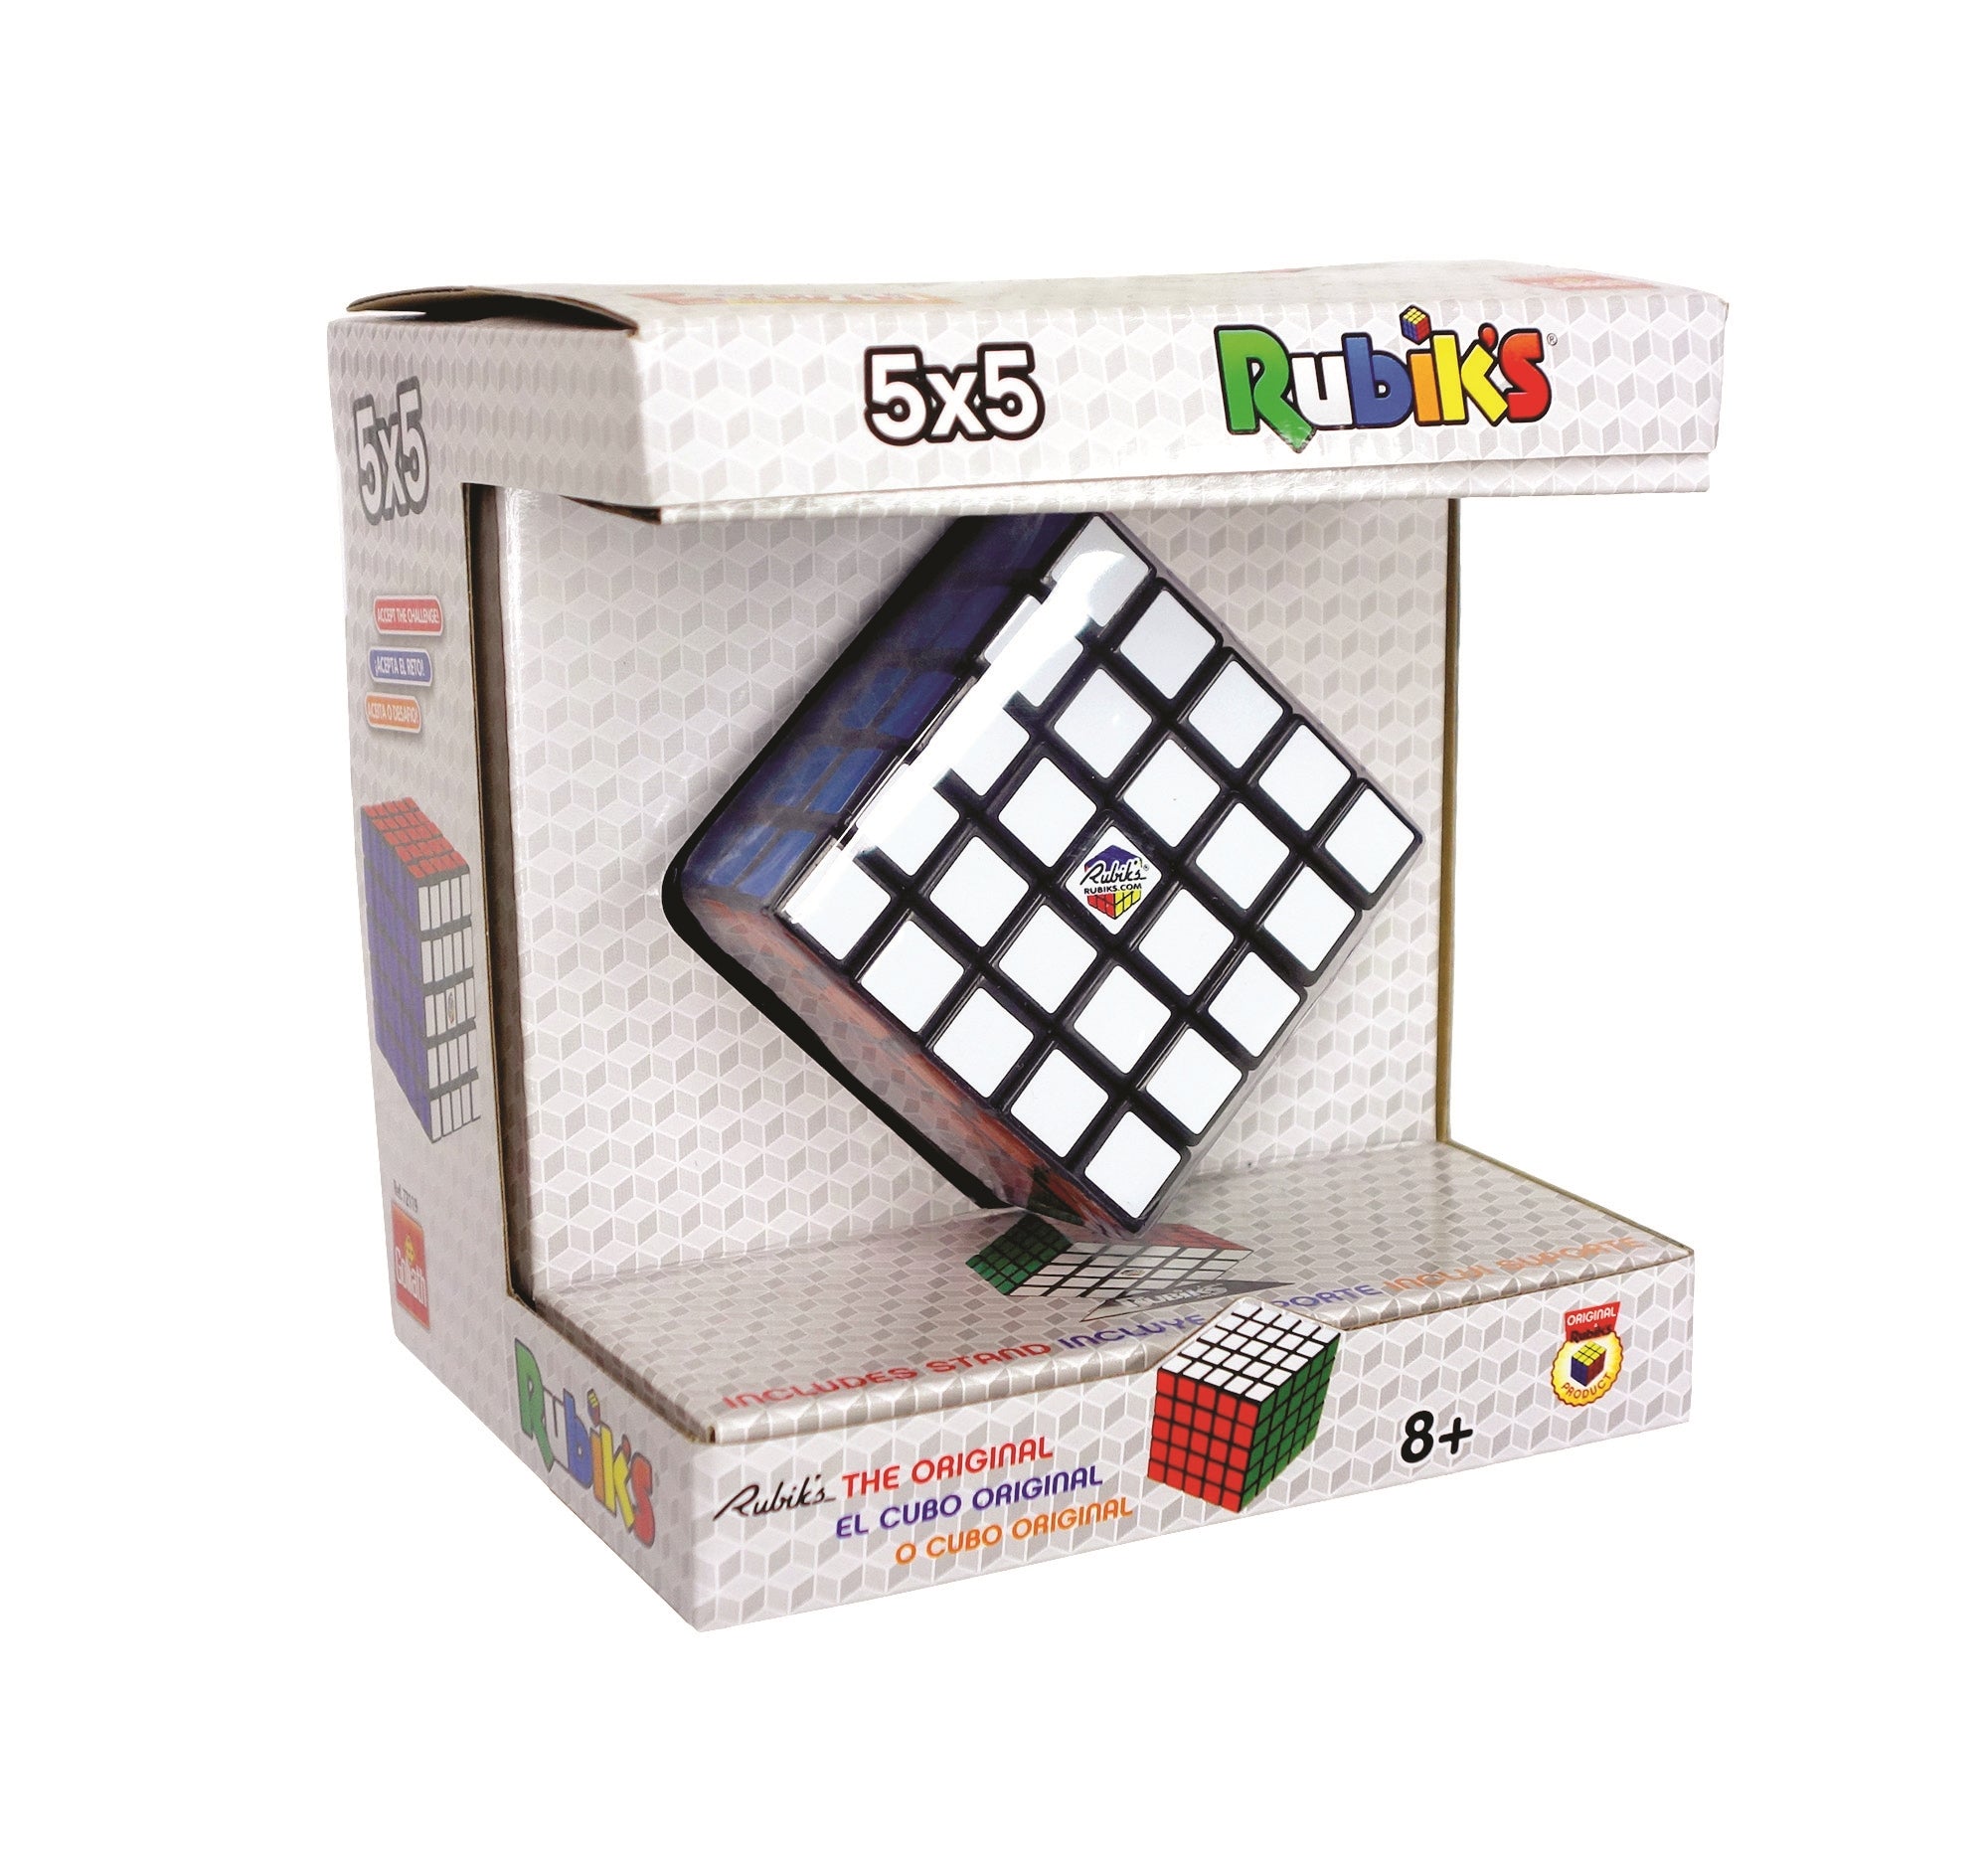 Rubiks 5x5 Cube Professor